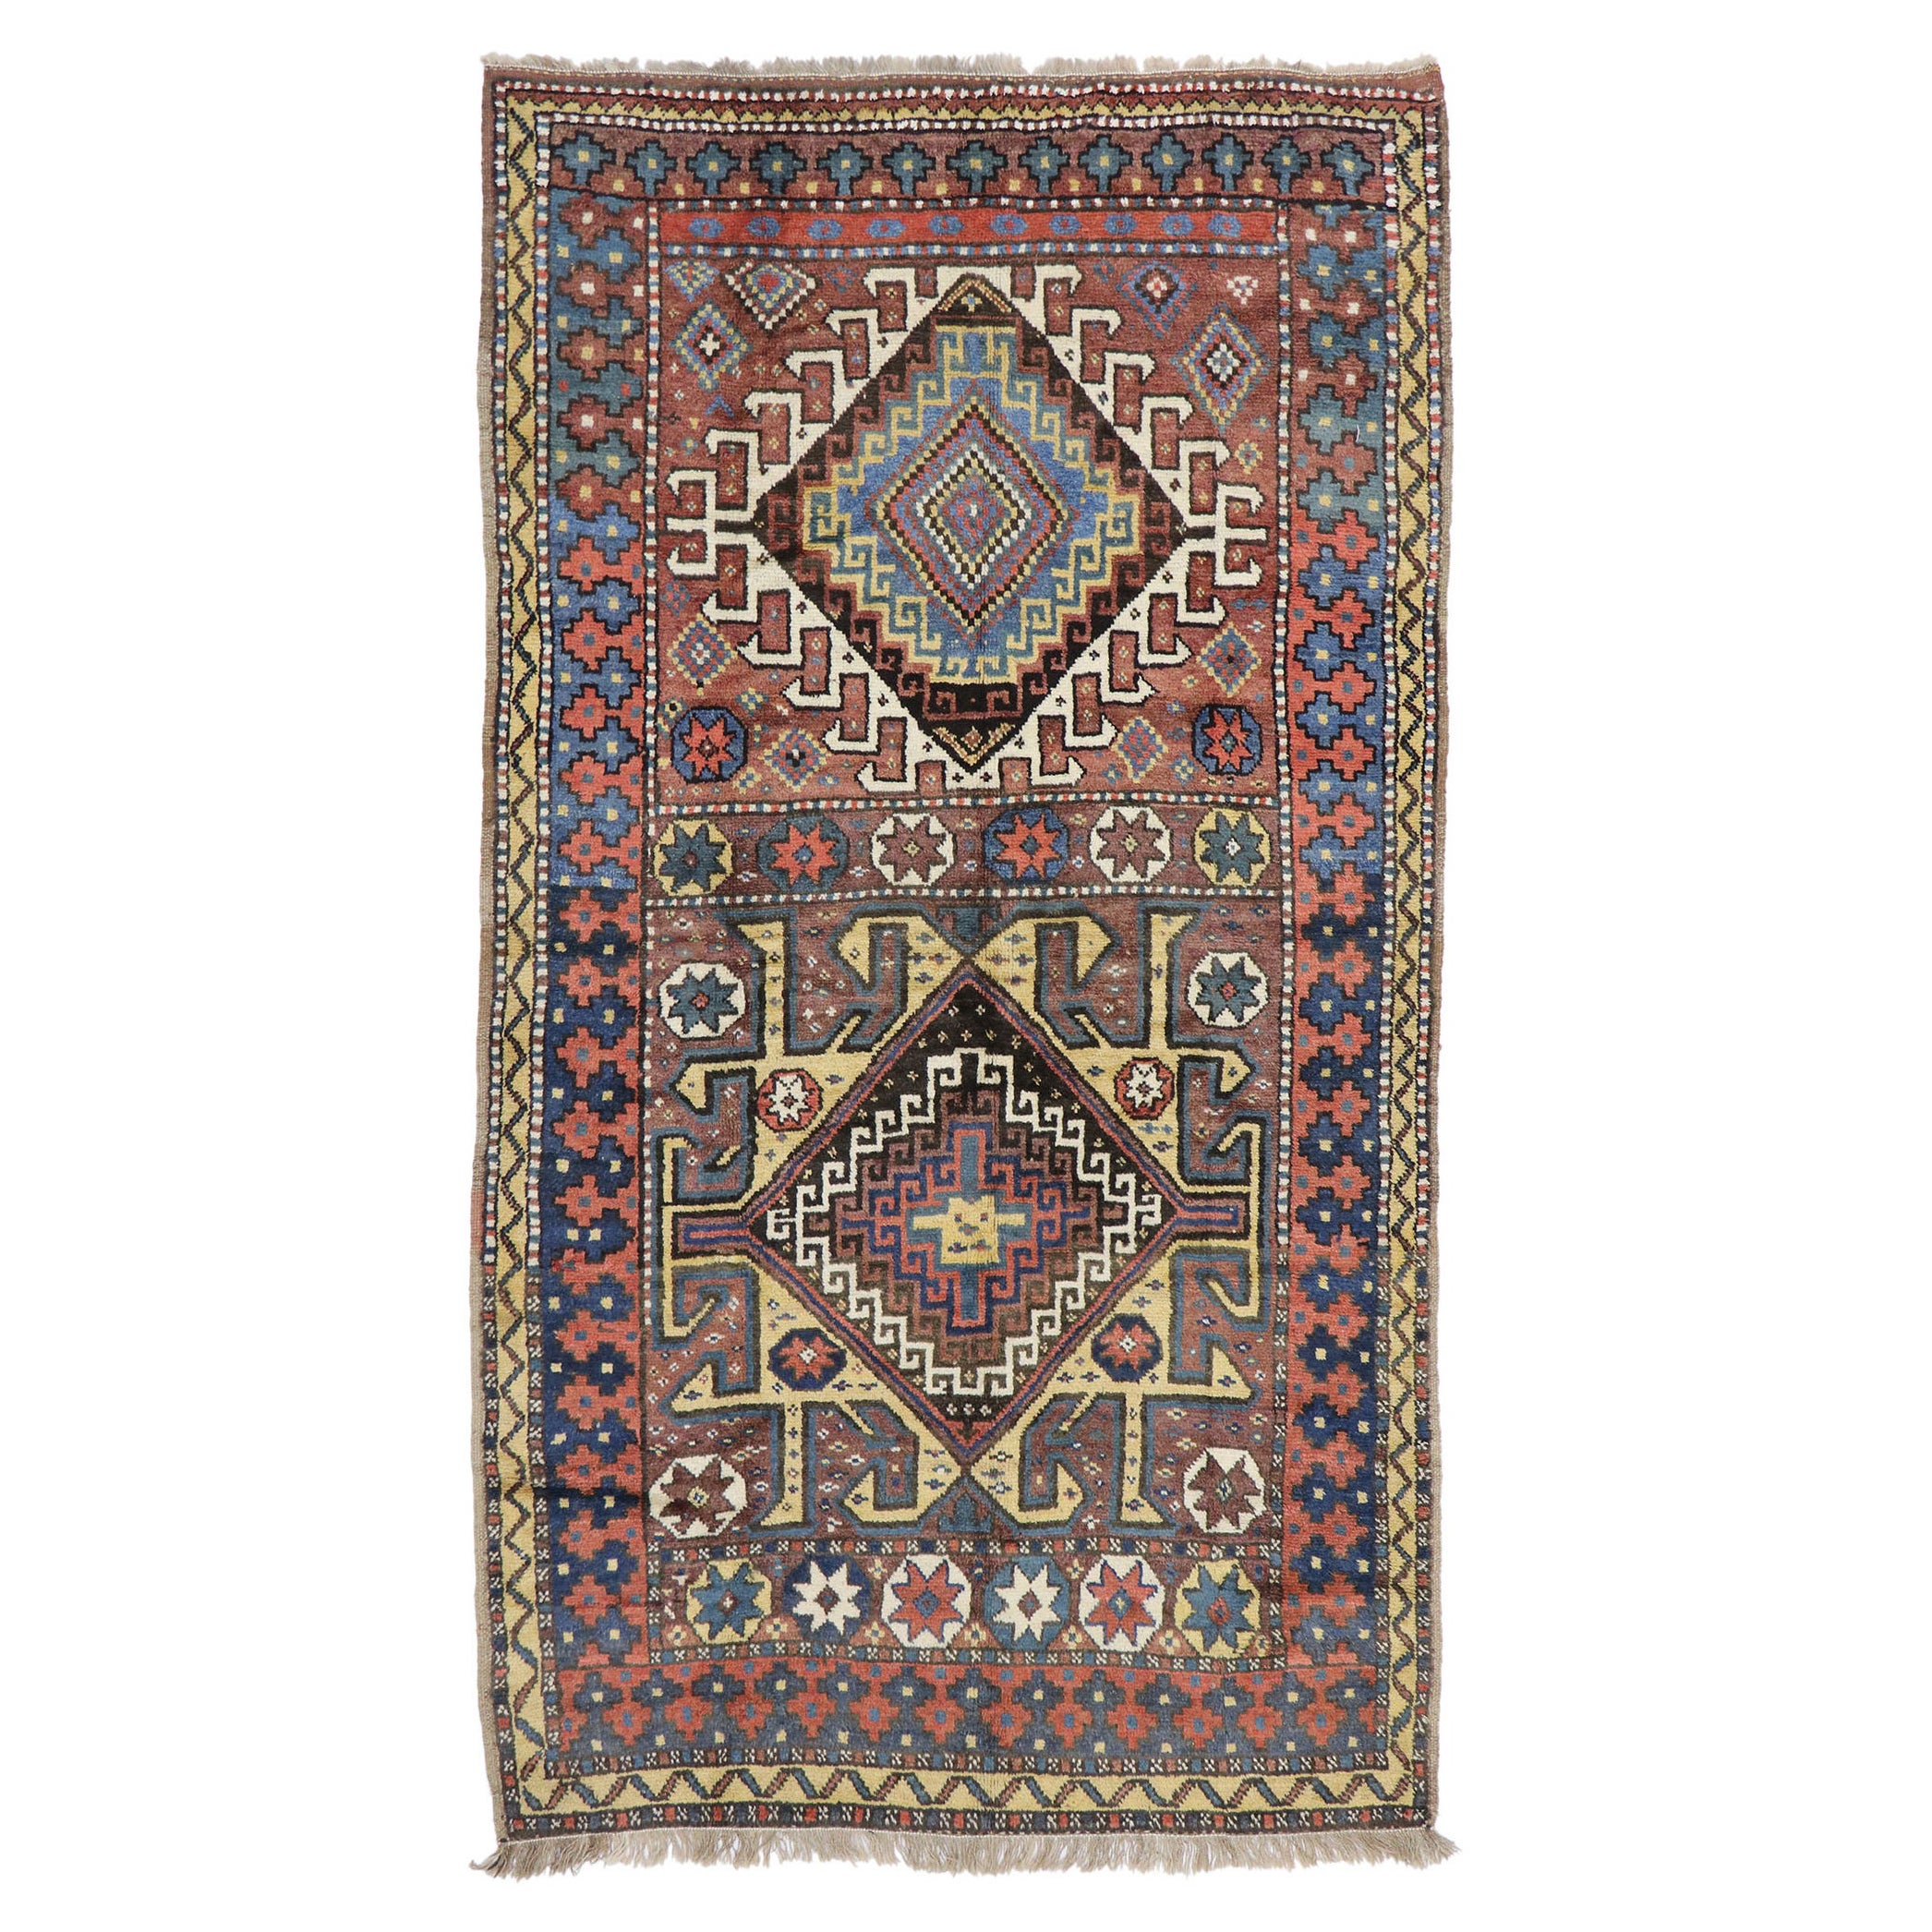 Antique Azerbaijan Rug with Tribal Style